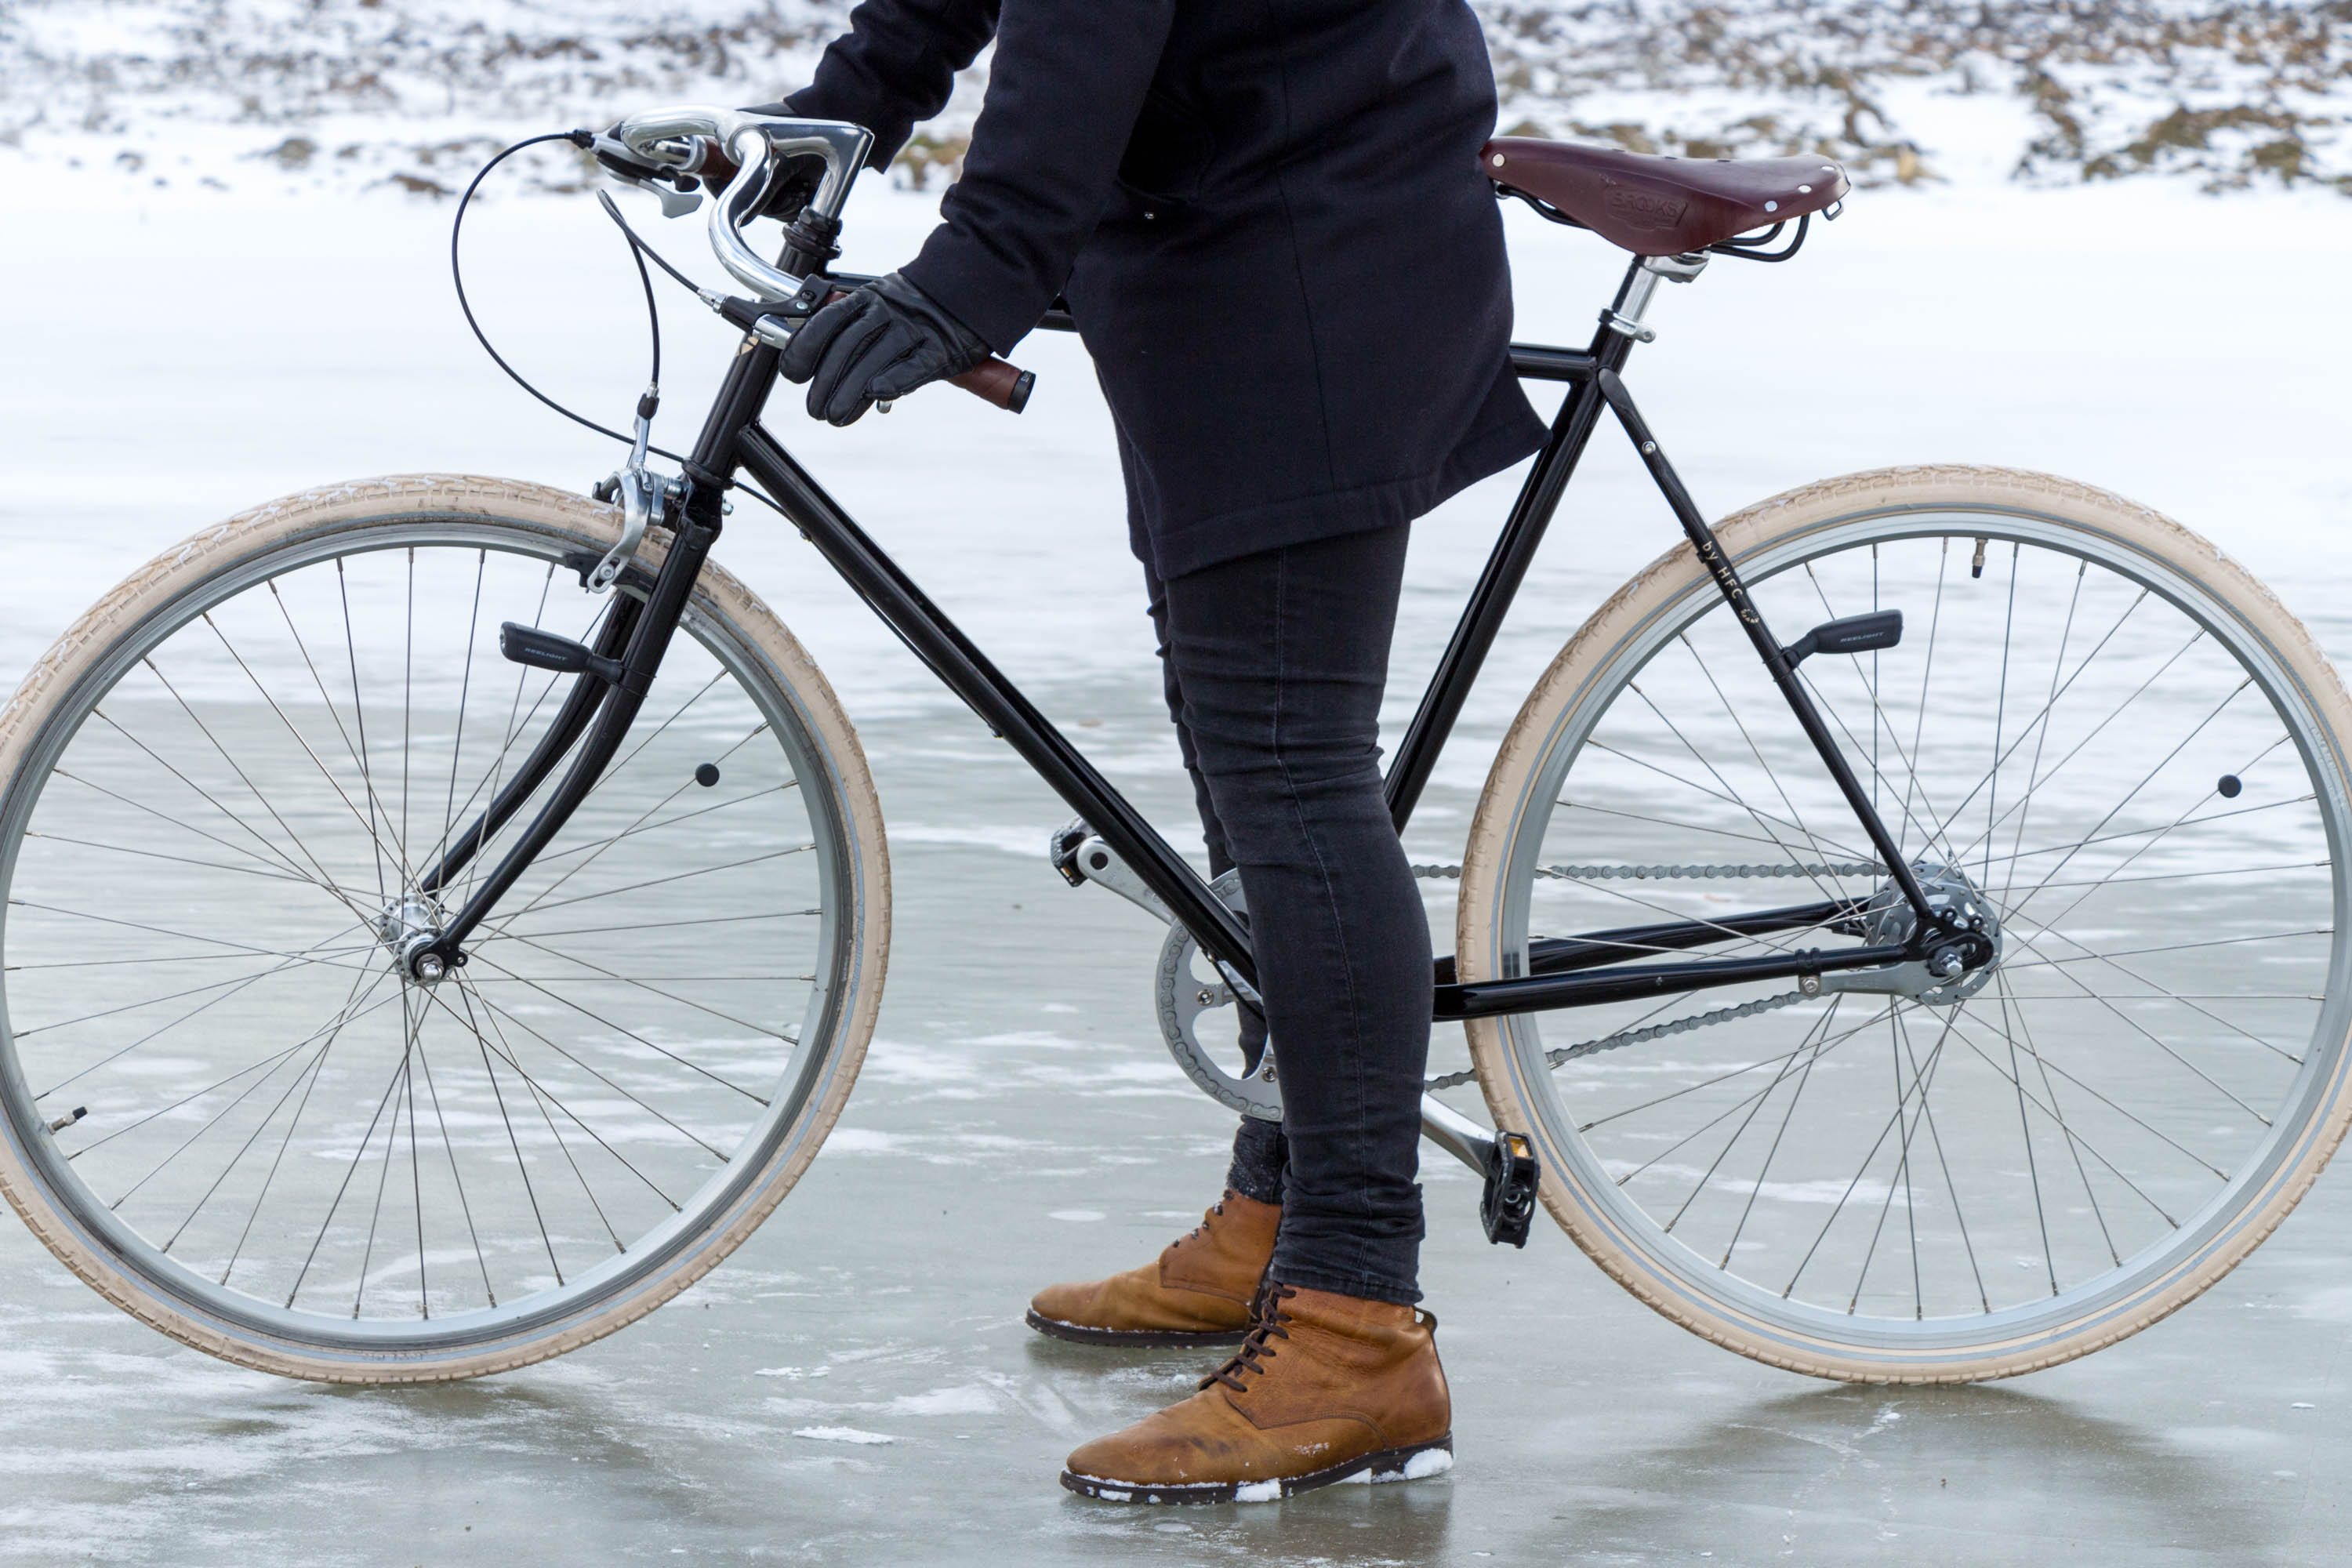 Winter Wear for Winter Biking: Stay Warm and Safe on Two Wheels